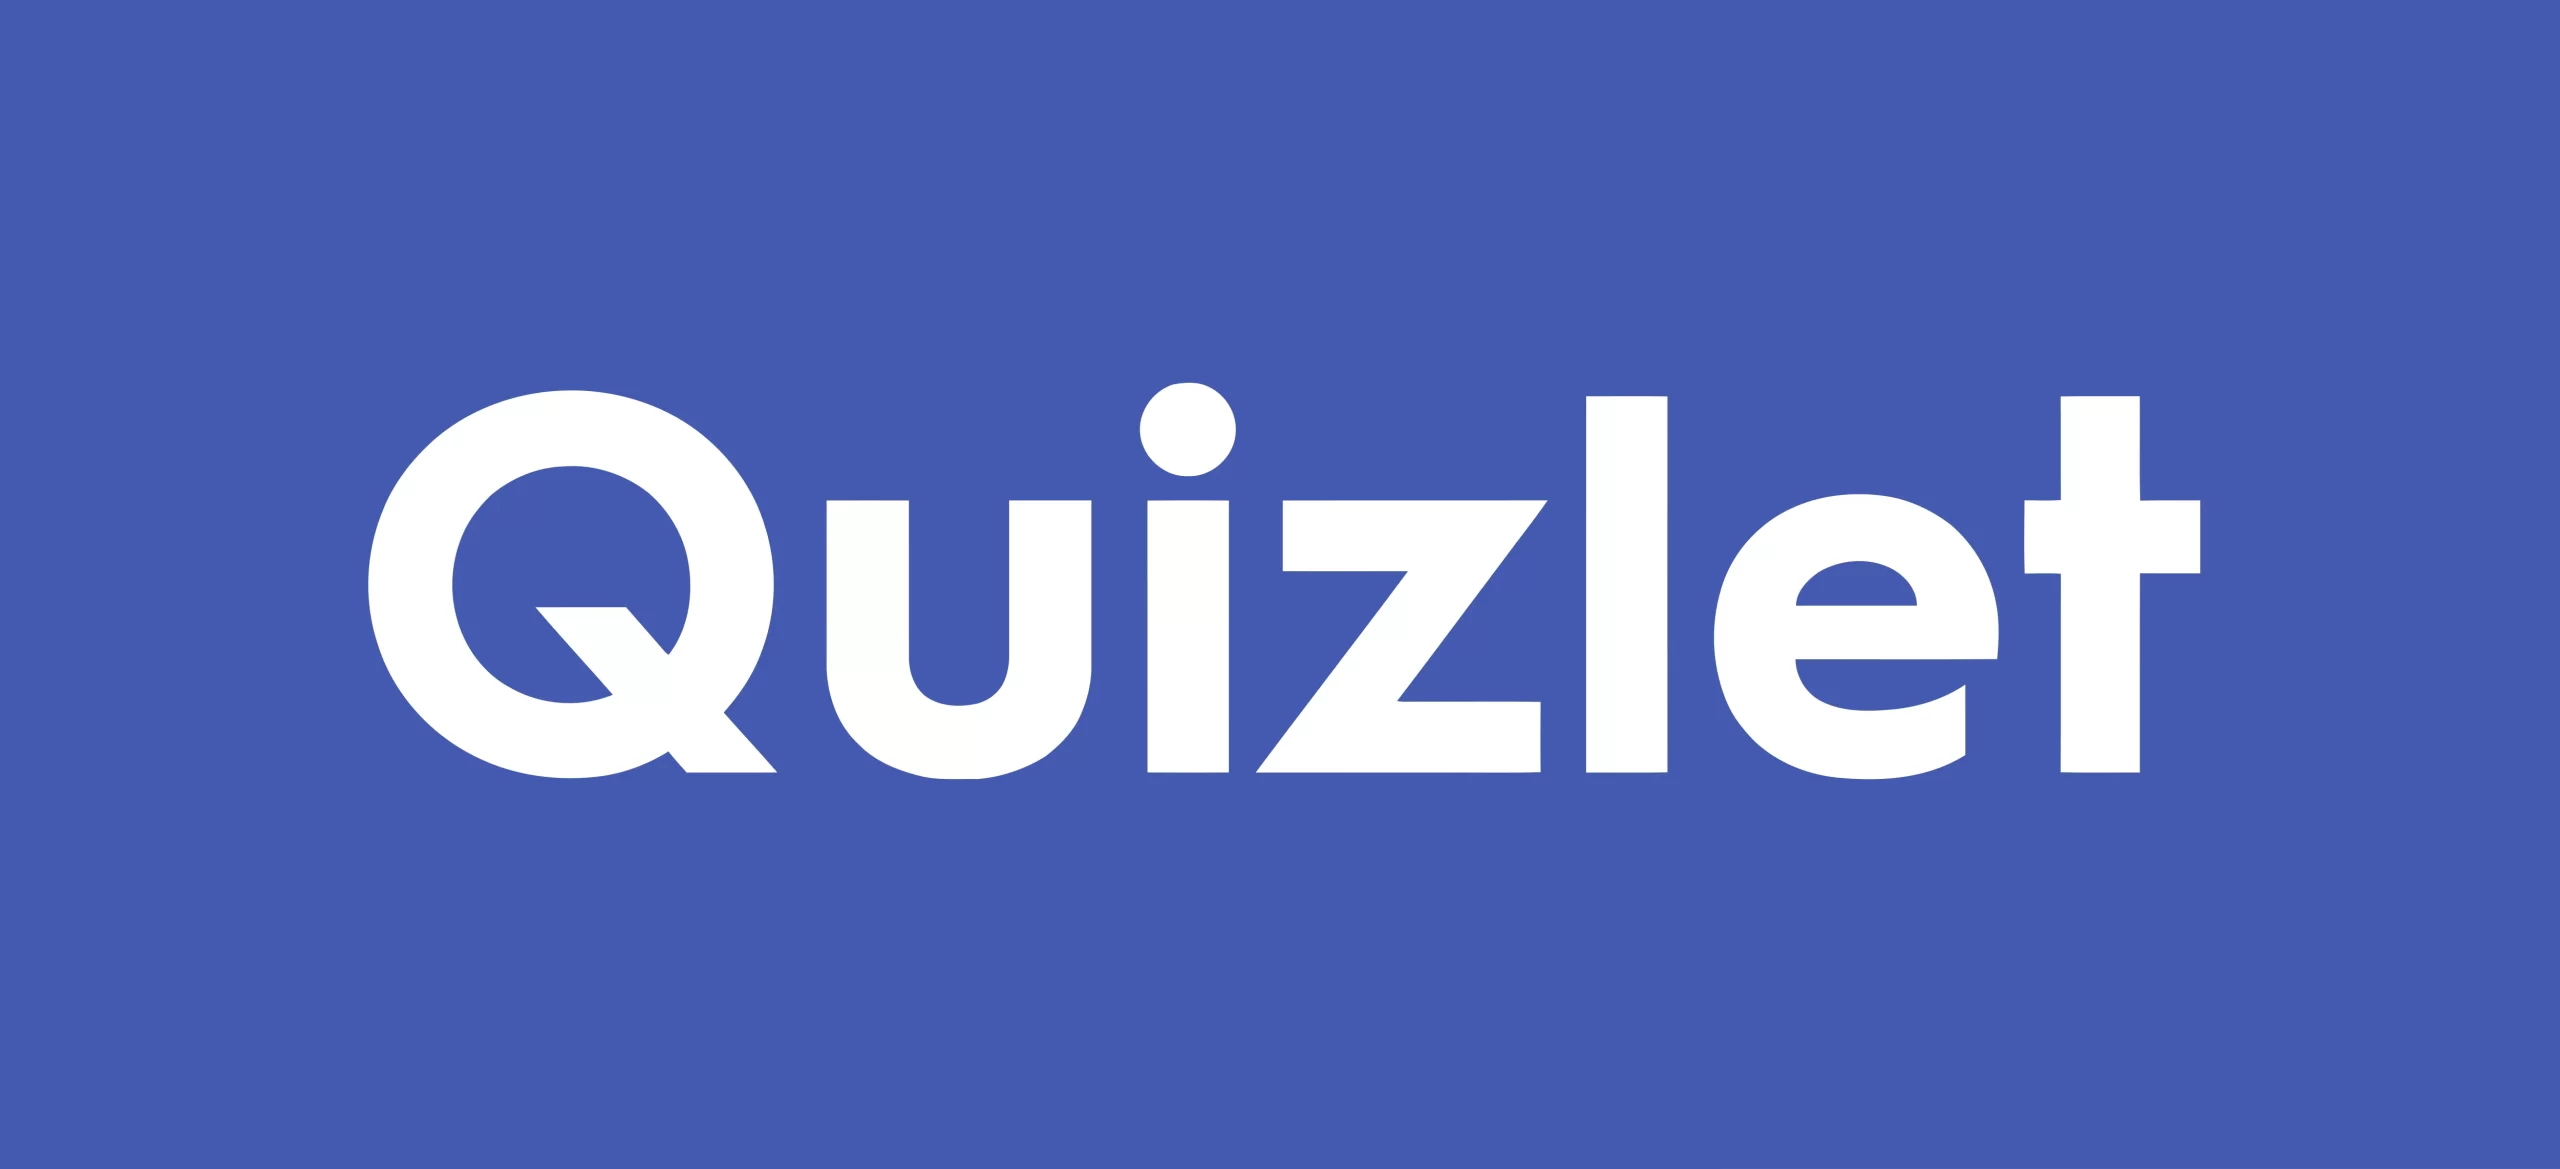 Quizlet Logo scaled - No1 Techspot For Gadget Reviews, How-Tos, And Latest Mods